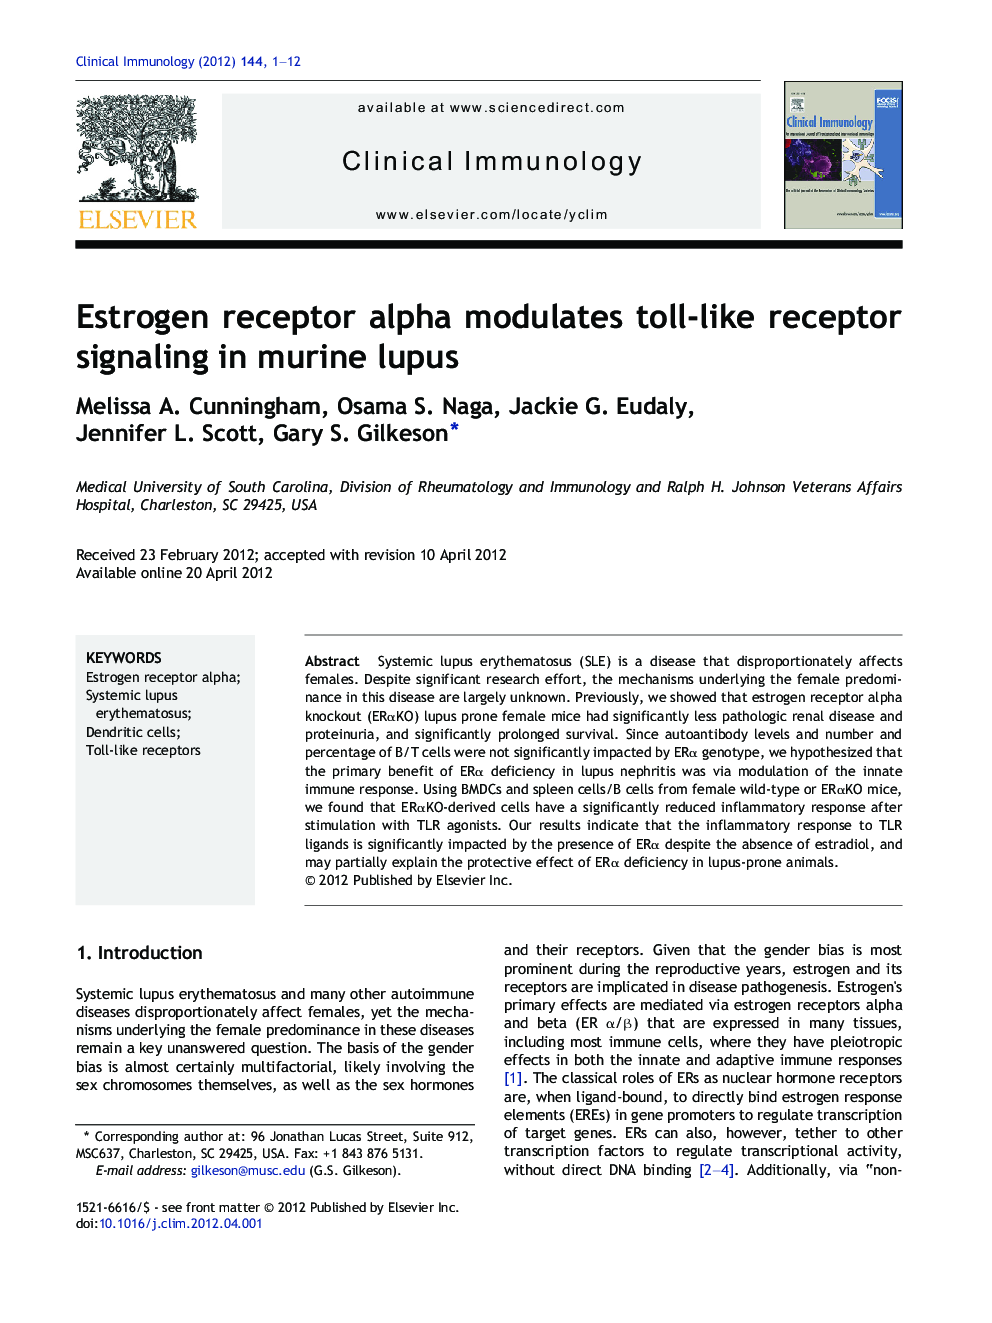 Estrogen receptor alpha modulates toll-like receptor signaling in murine lupus